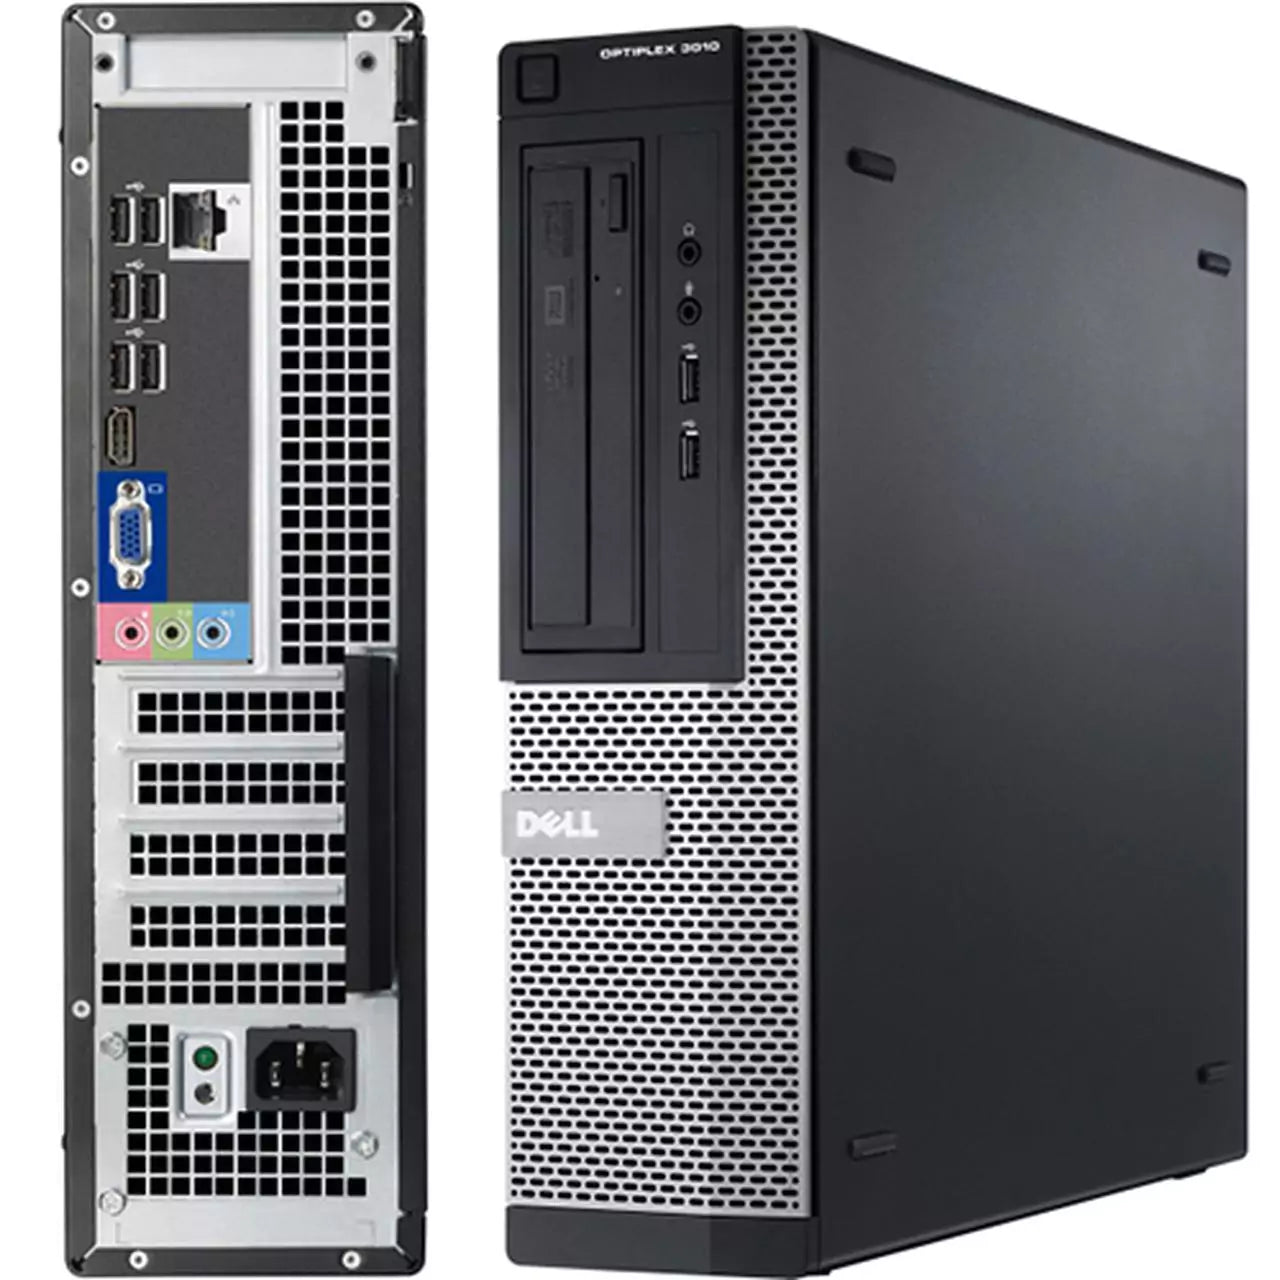 Dell Optiplex 3010 DT | Intel Core i5-3470 3.2Ghz | 8Gb Ram | SSD 256Gb | Windows 10 | Performance and upgradeability